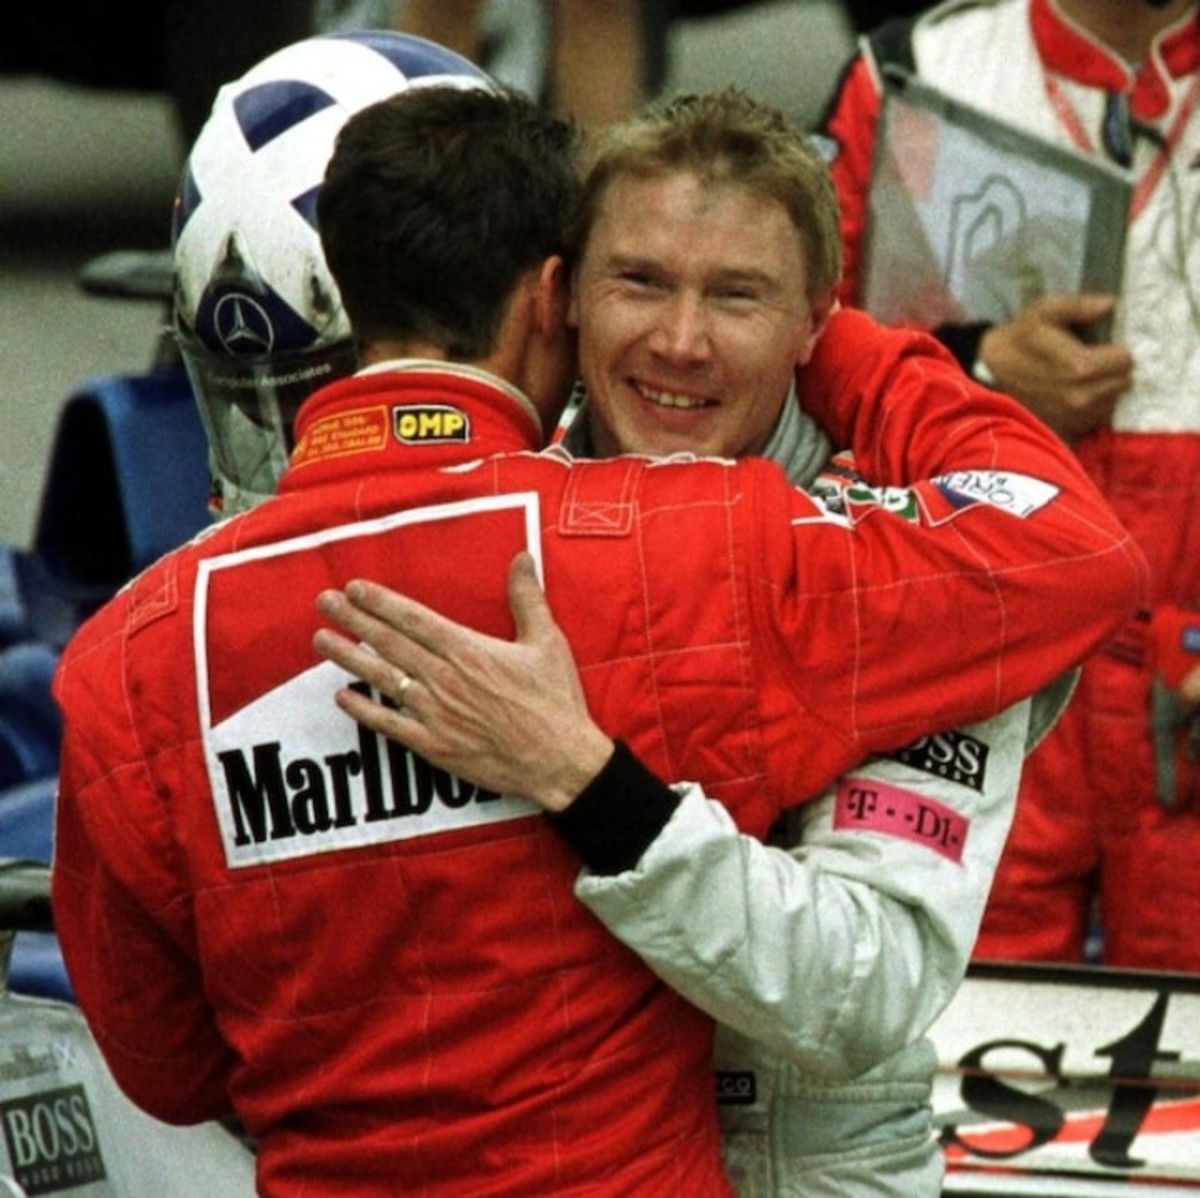 The 2001 Spanish GP: Michael Schumacher’s 47th Career Win